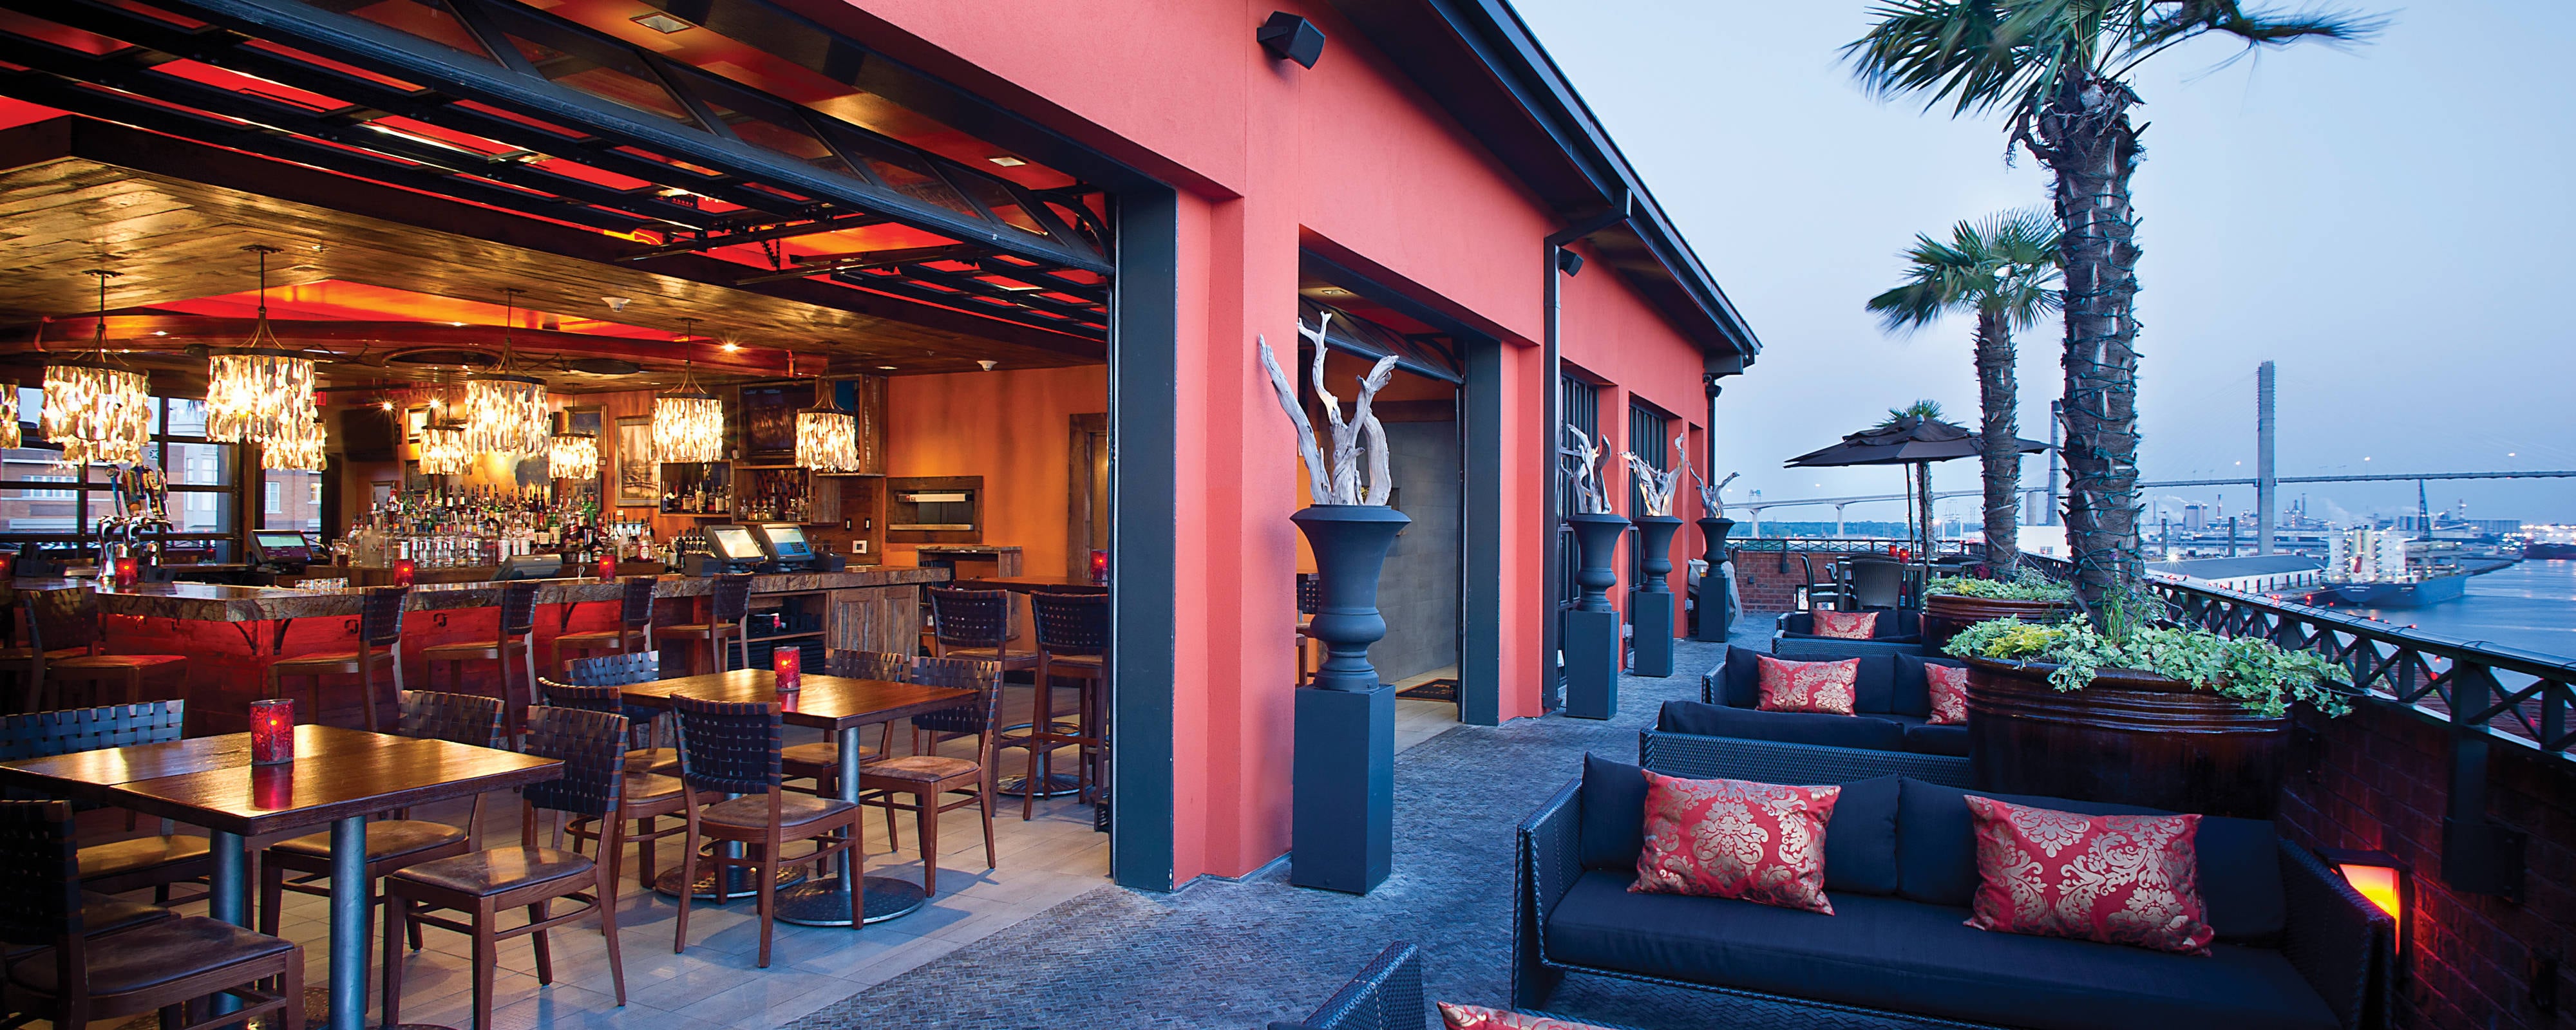 Restaurants on the Riverfront in Savannah GA - Rooftop Bar | The